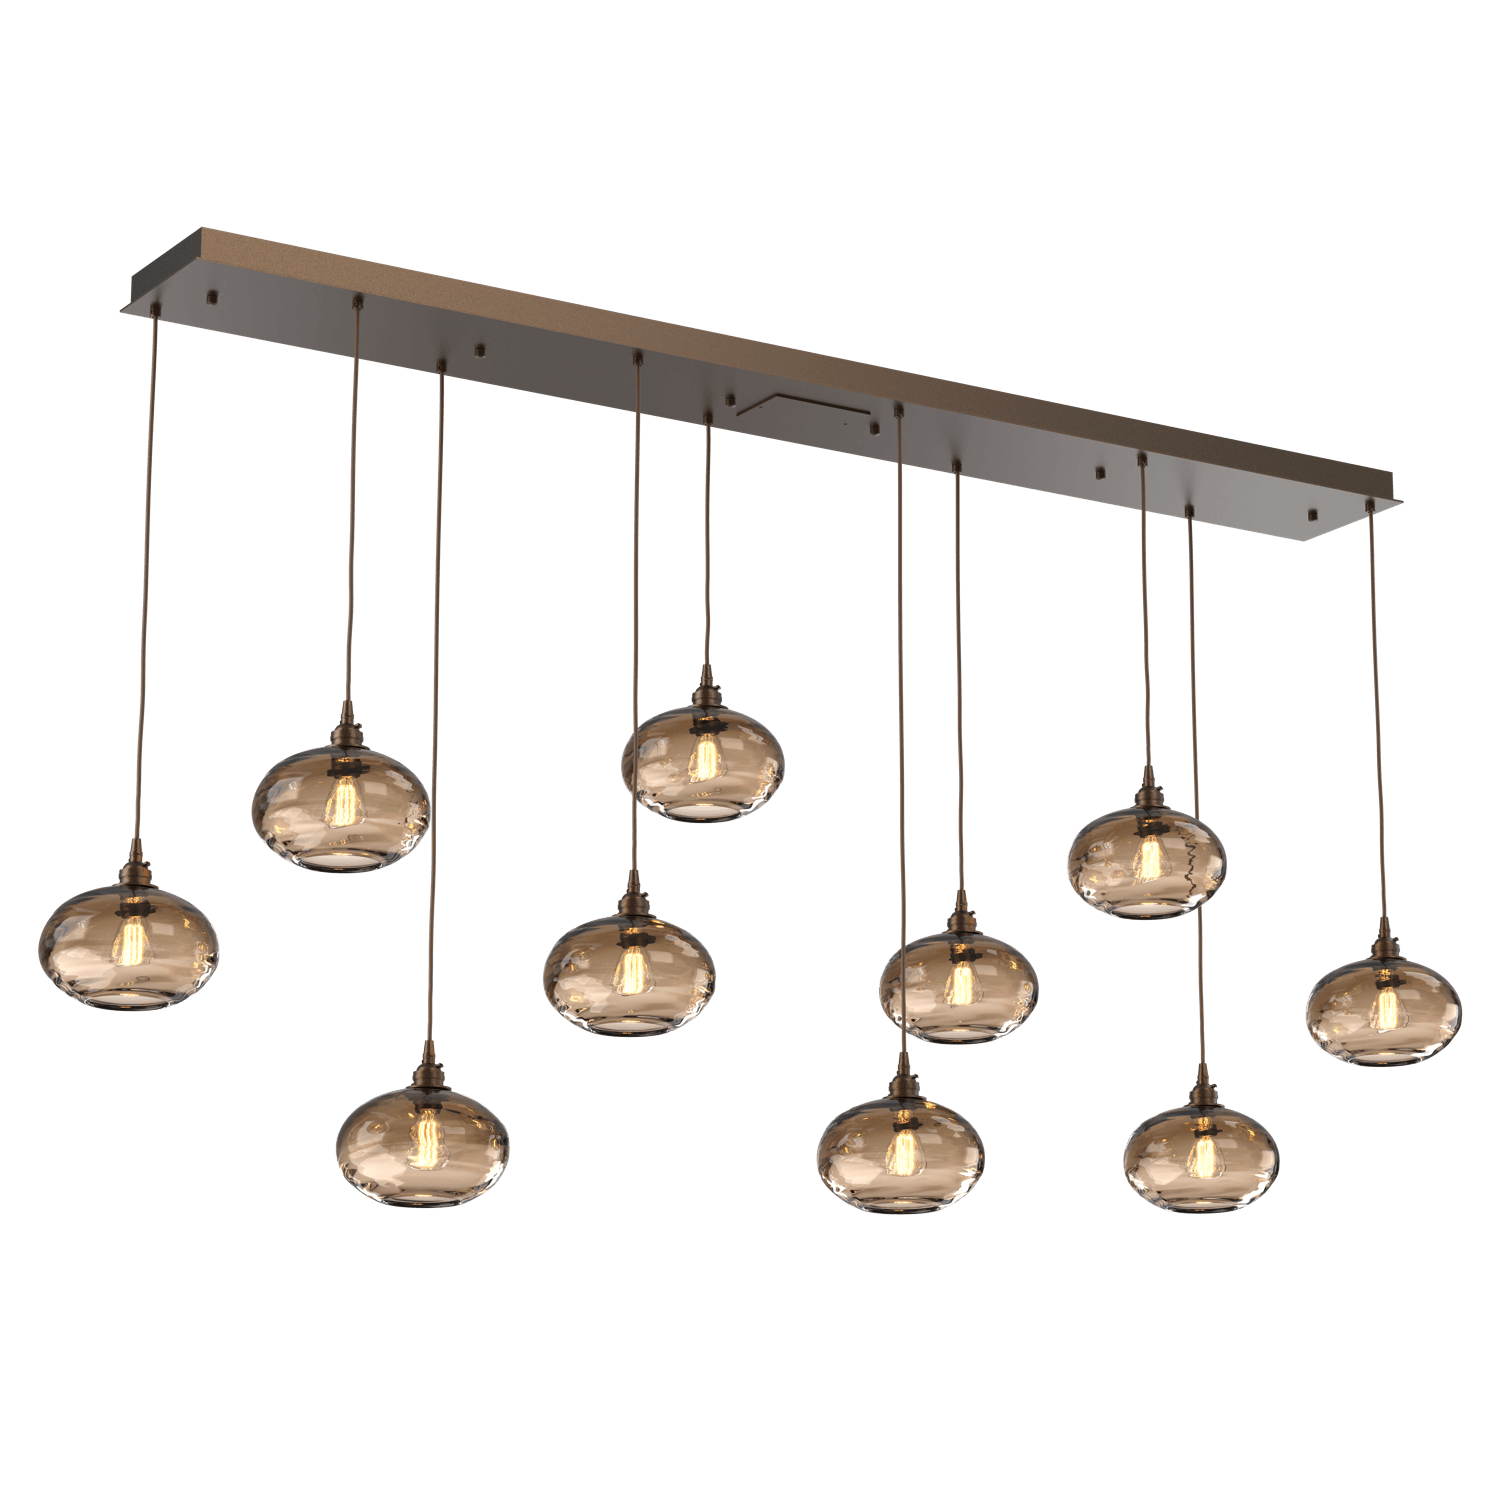 PLB0036-10-FB-OB-Hammerton-Studio-Optic-Blown-Glass-Coppa-10-light-linear-pendant-chandelier-with-flat-bronze-finish-and-optic-bronze-blown-glass-shades-and-incandescent-lamping